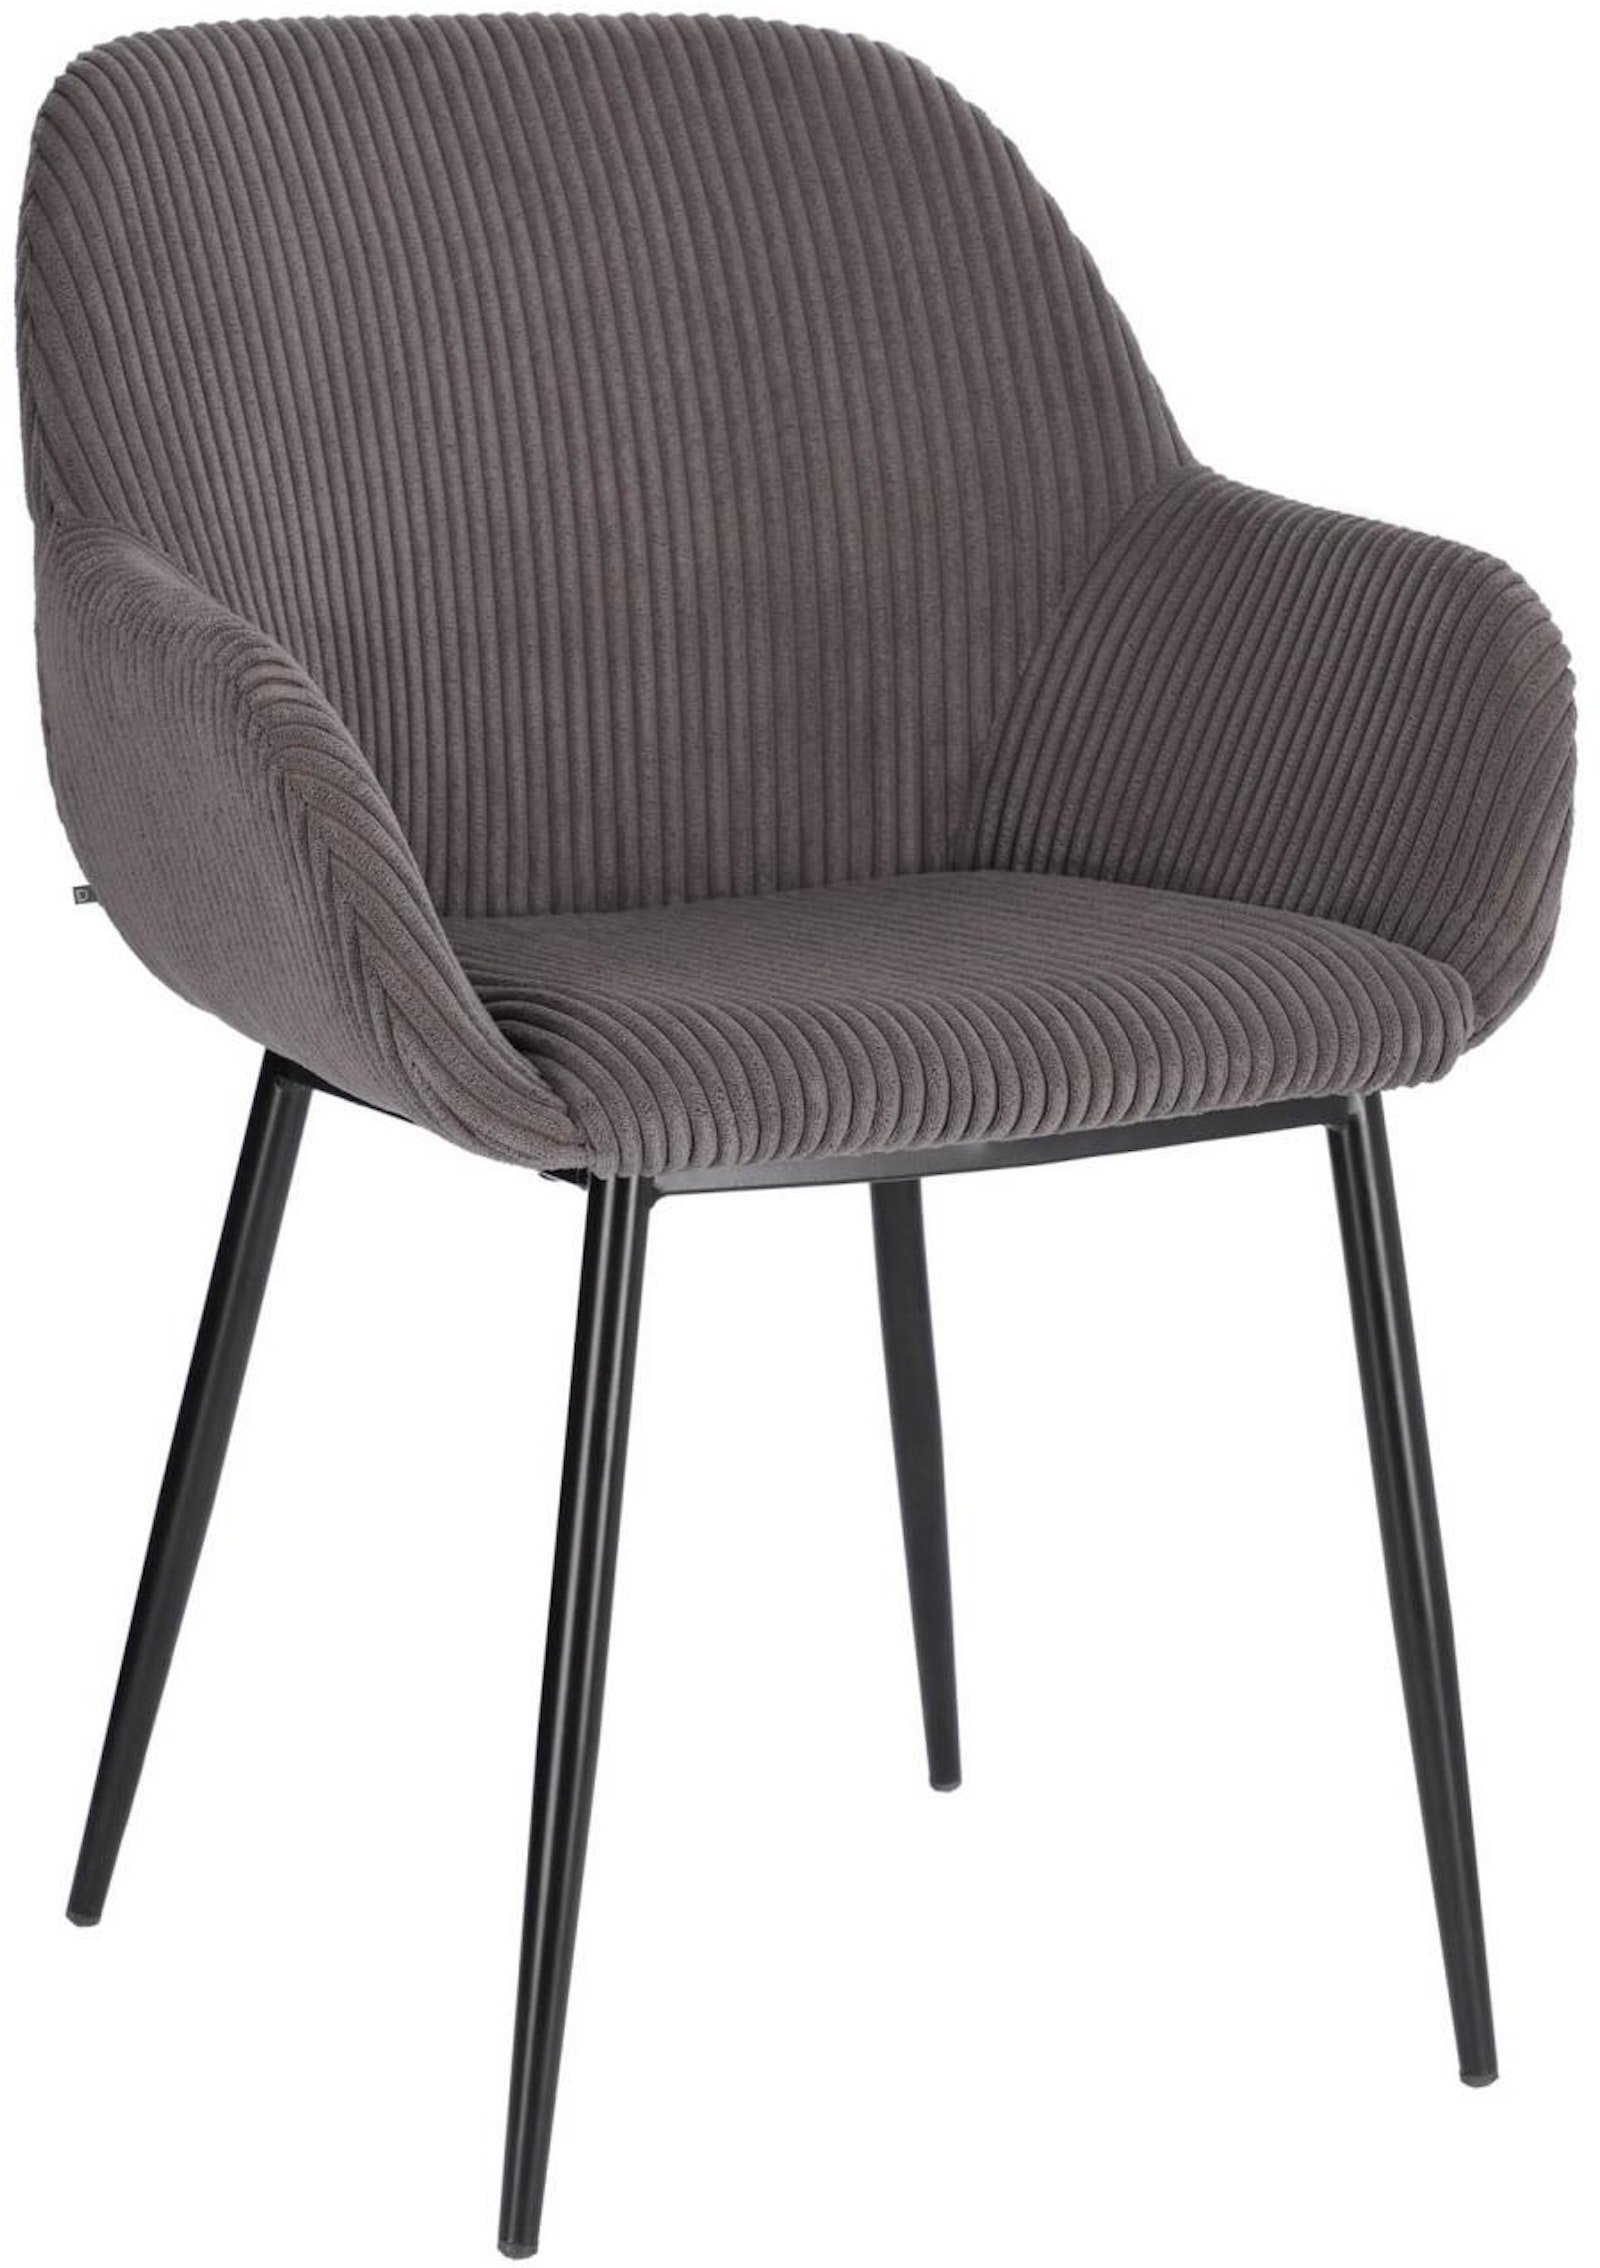 Konna, Spisebordsstol, vintage, industriel, stof by LaForma (H: 83 cm. x B: 59 cm. x L: 55 cm., Mørkegrå)